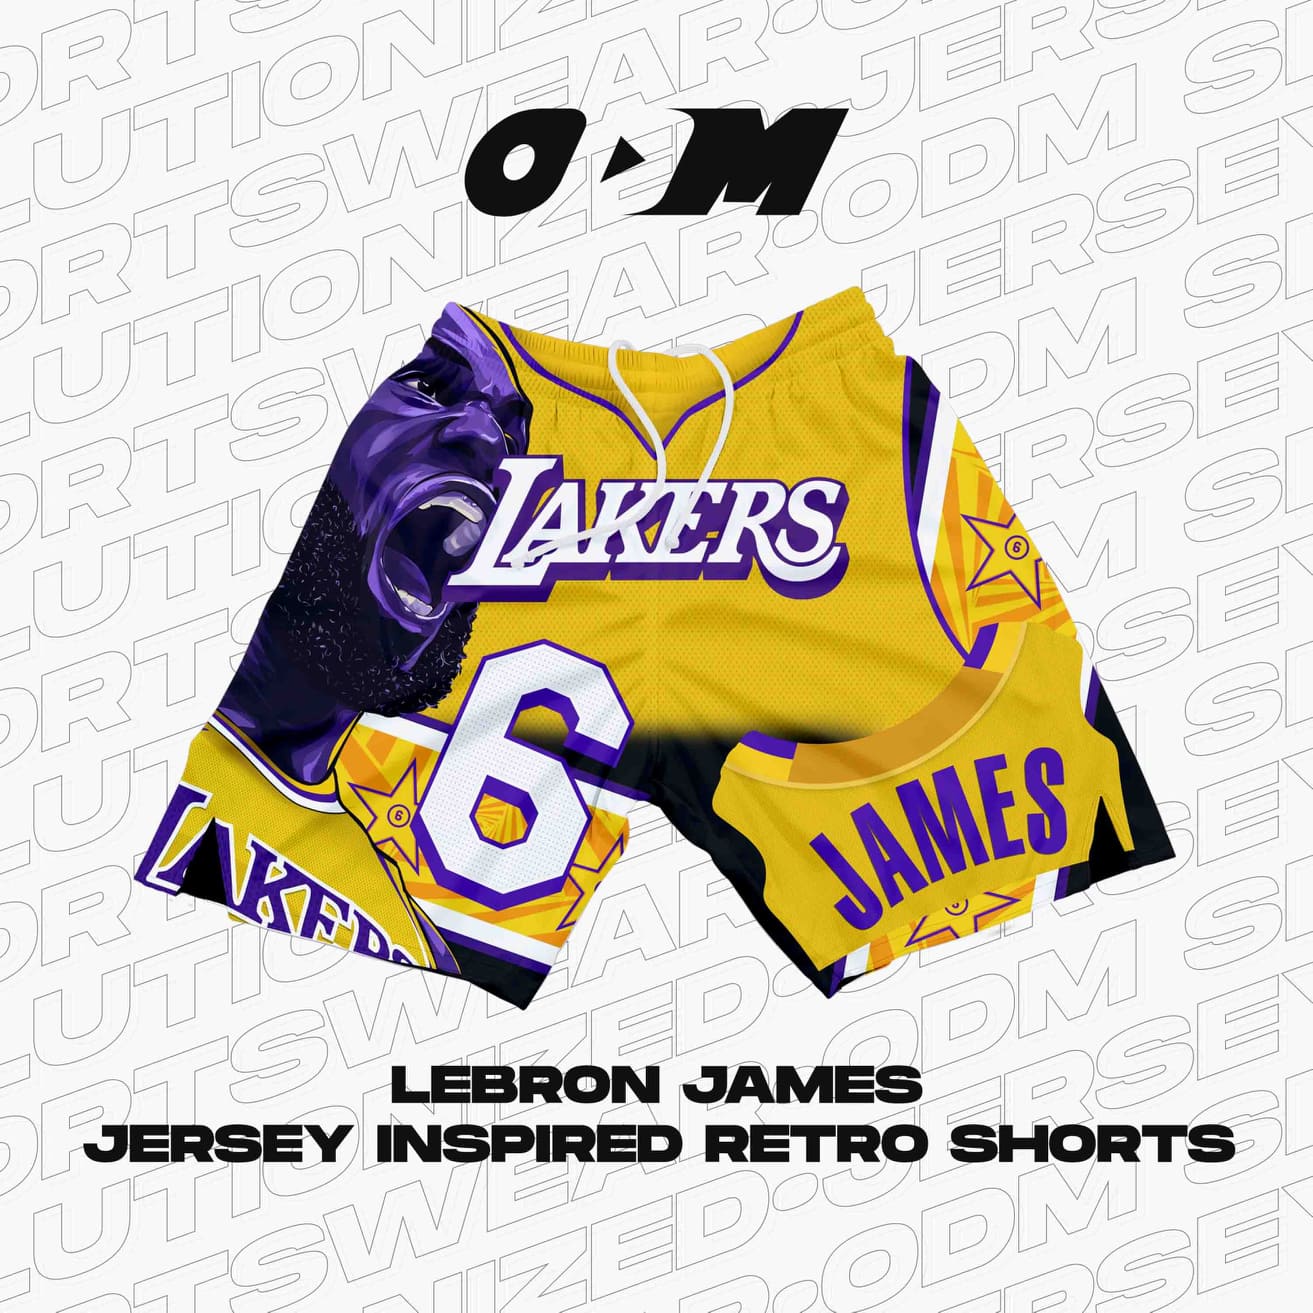 LEBRON JAMES Jersey Inspired Retro Shorts